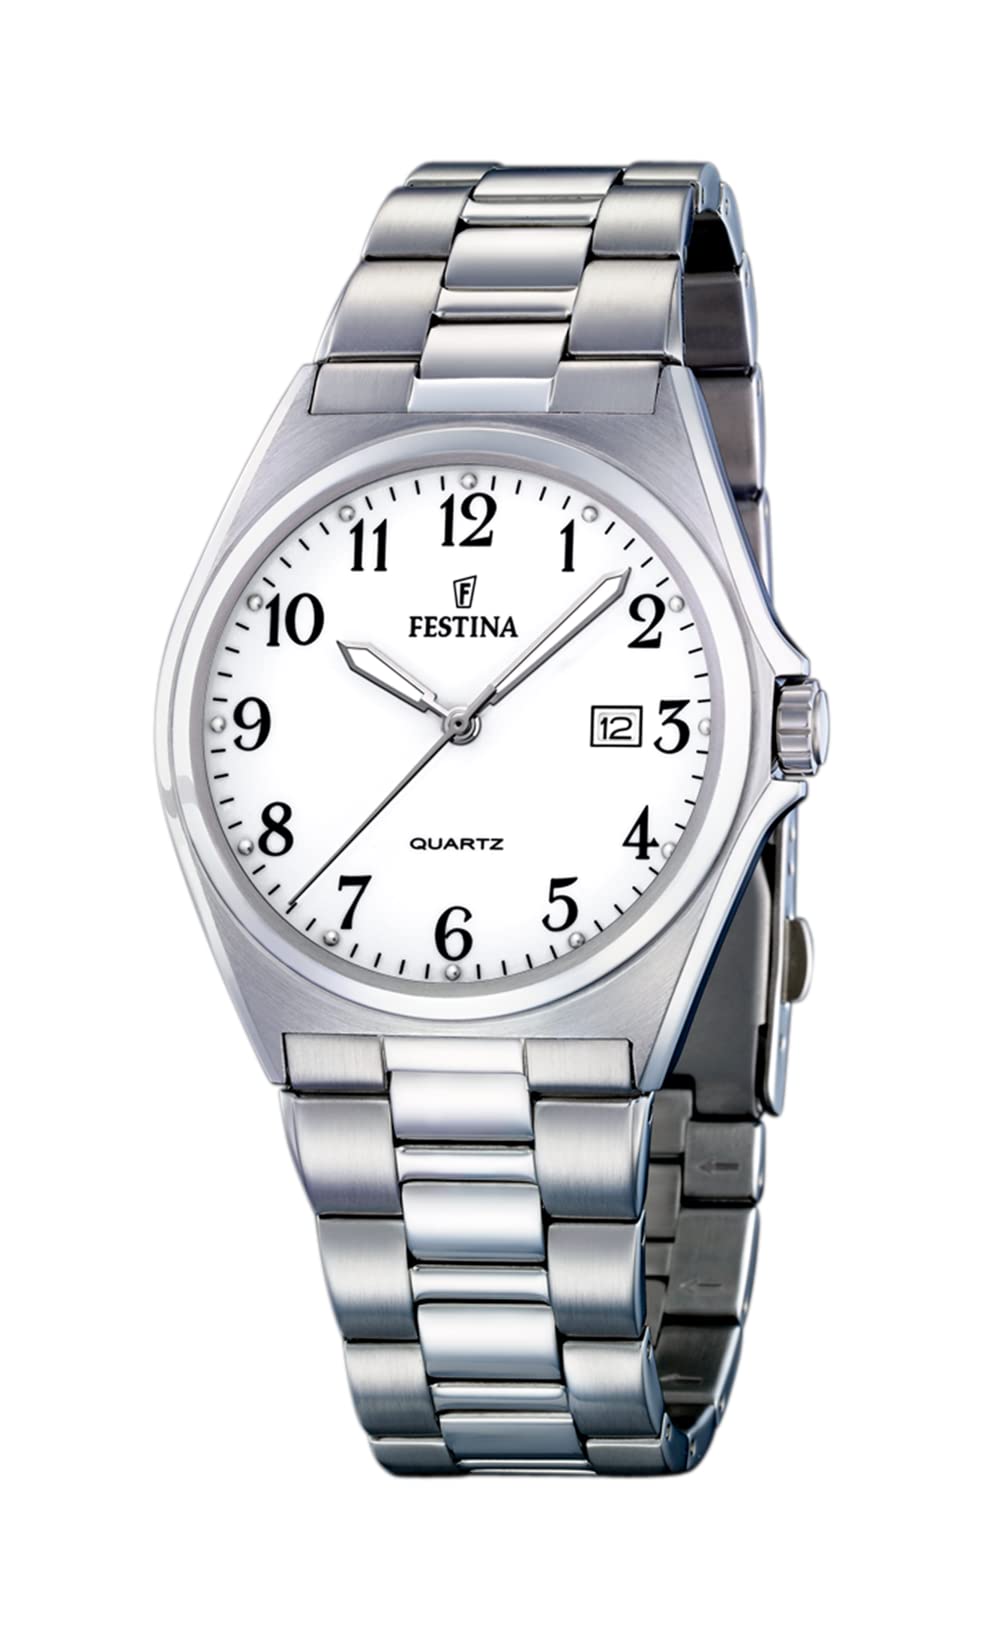 Festina Men's Analogue Quartz Watch with Stainless Steel Strap F16374/1, White/Silver, Bracelet